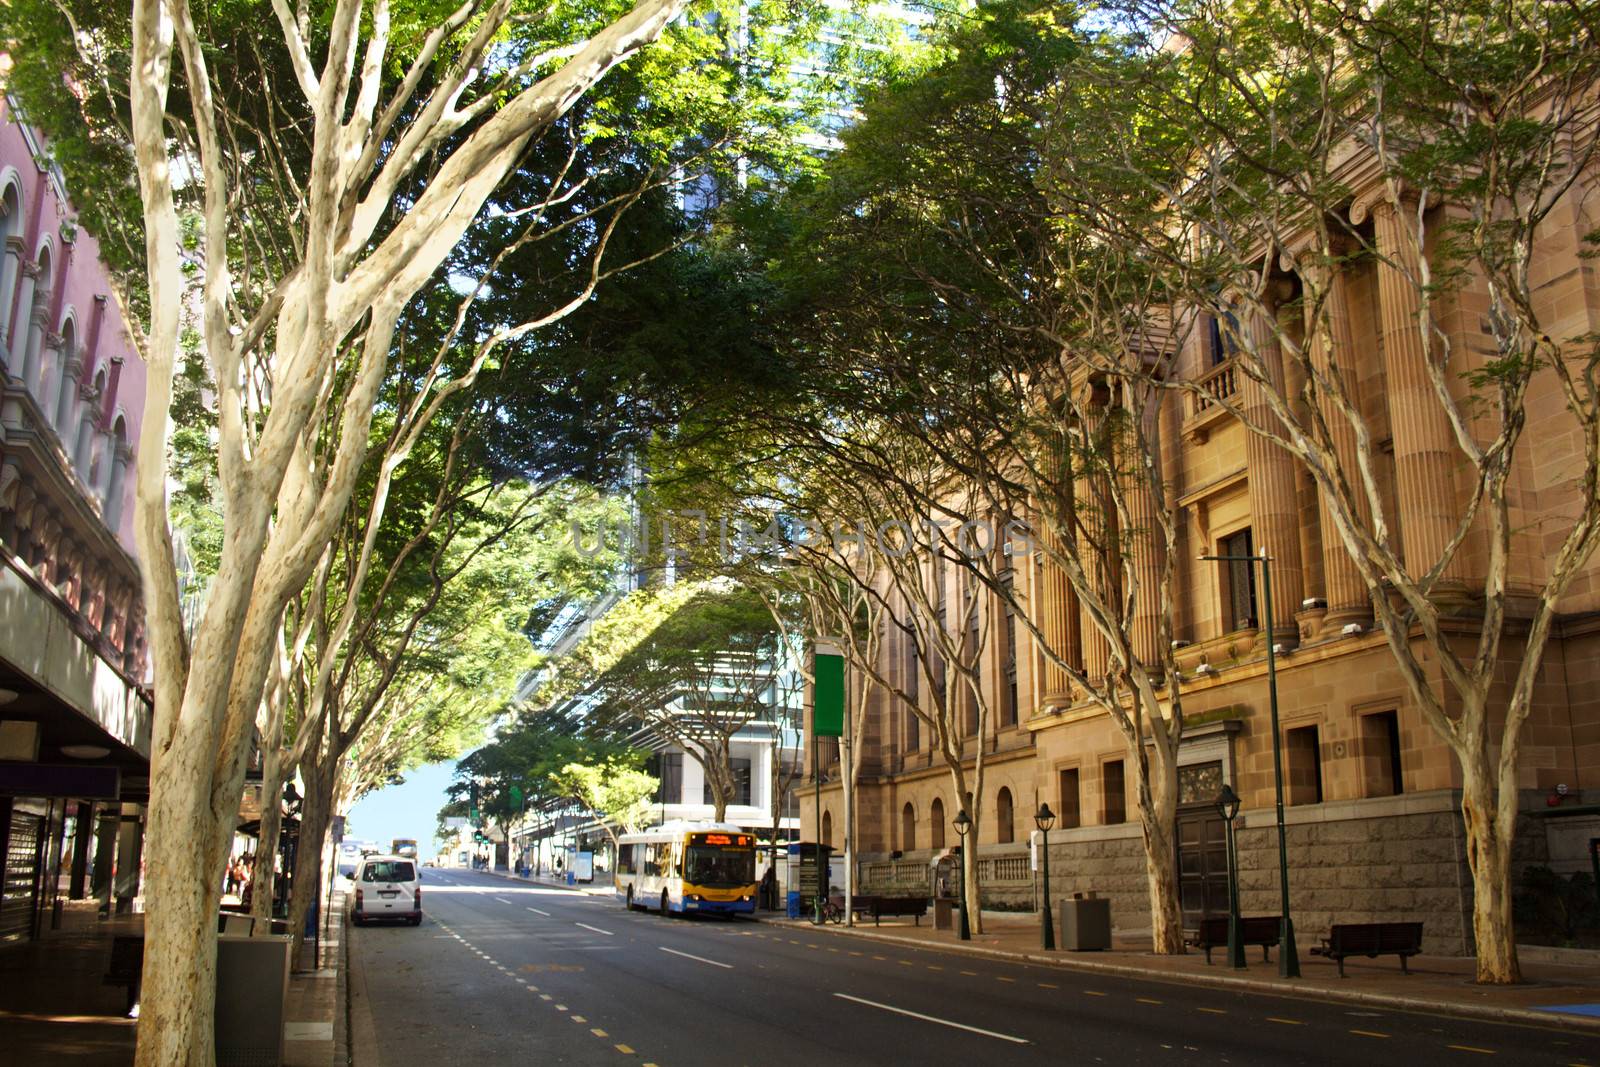 Adelaide Street in Brisbane, Queensland Australia with entrance to Brisbane City Hall.